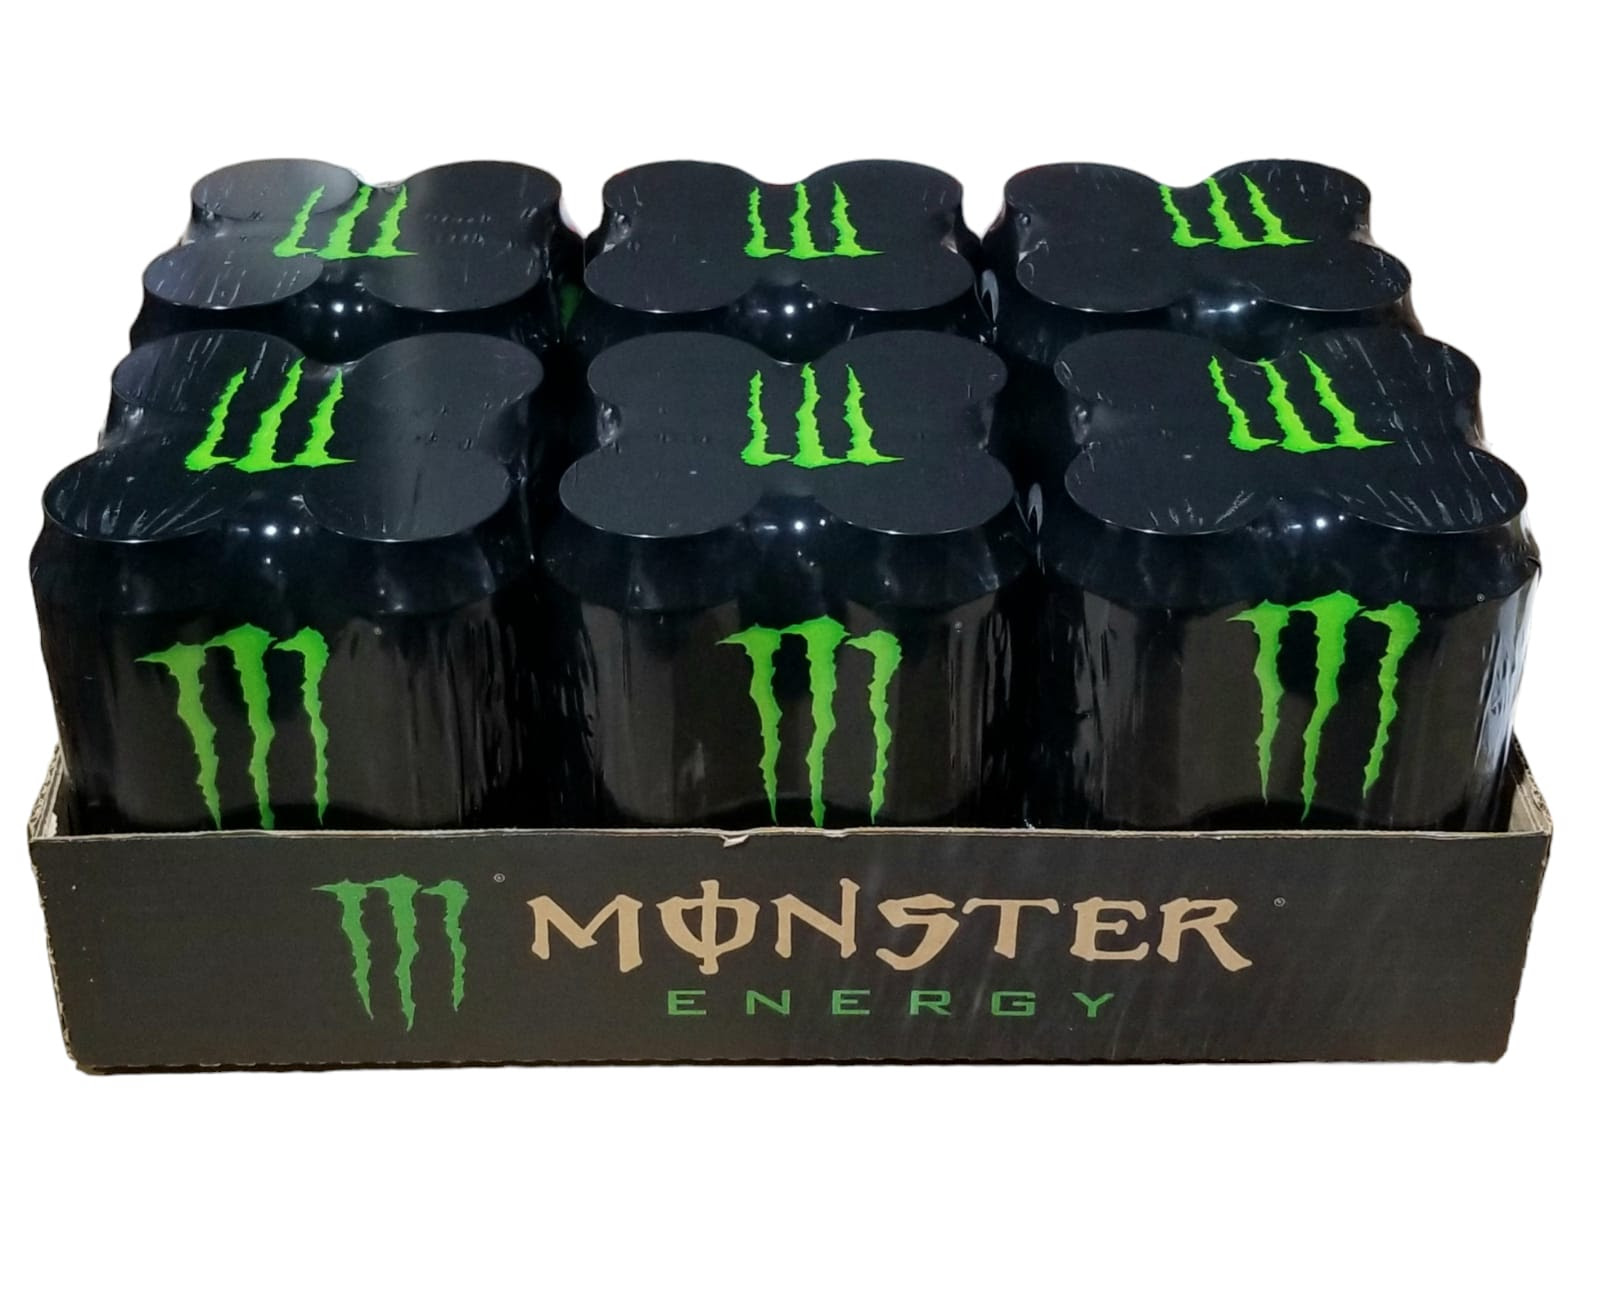 Monster 24Pack 16 oz (500ml) Energy Drink.  1800 Cases. EXW New Jersey $30.00/Case.